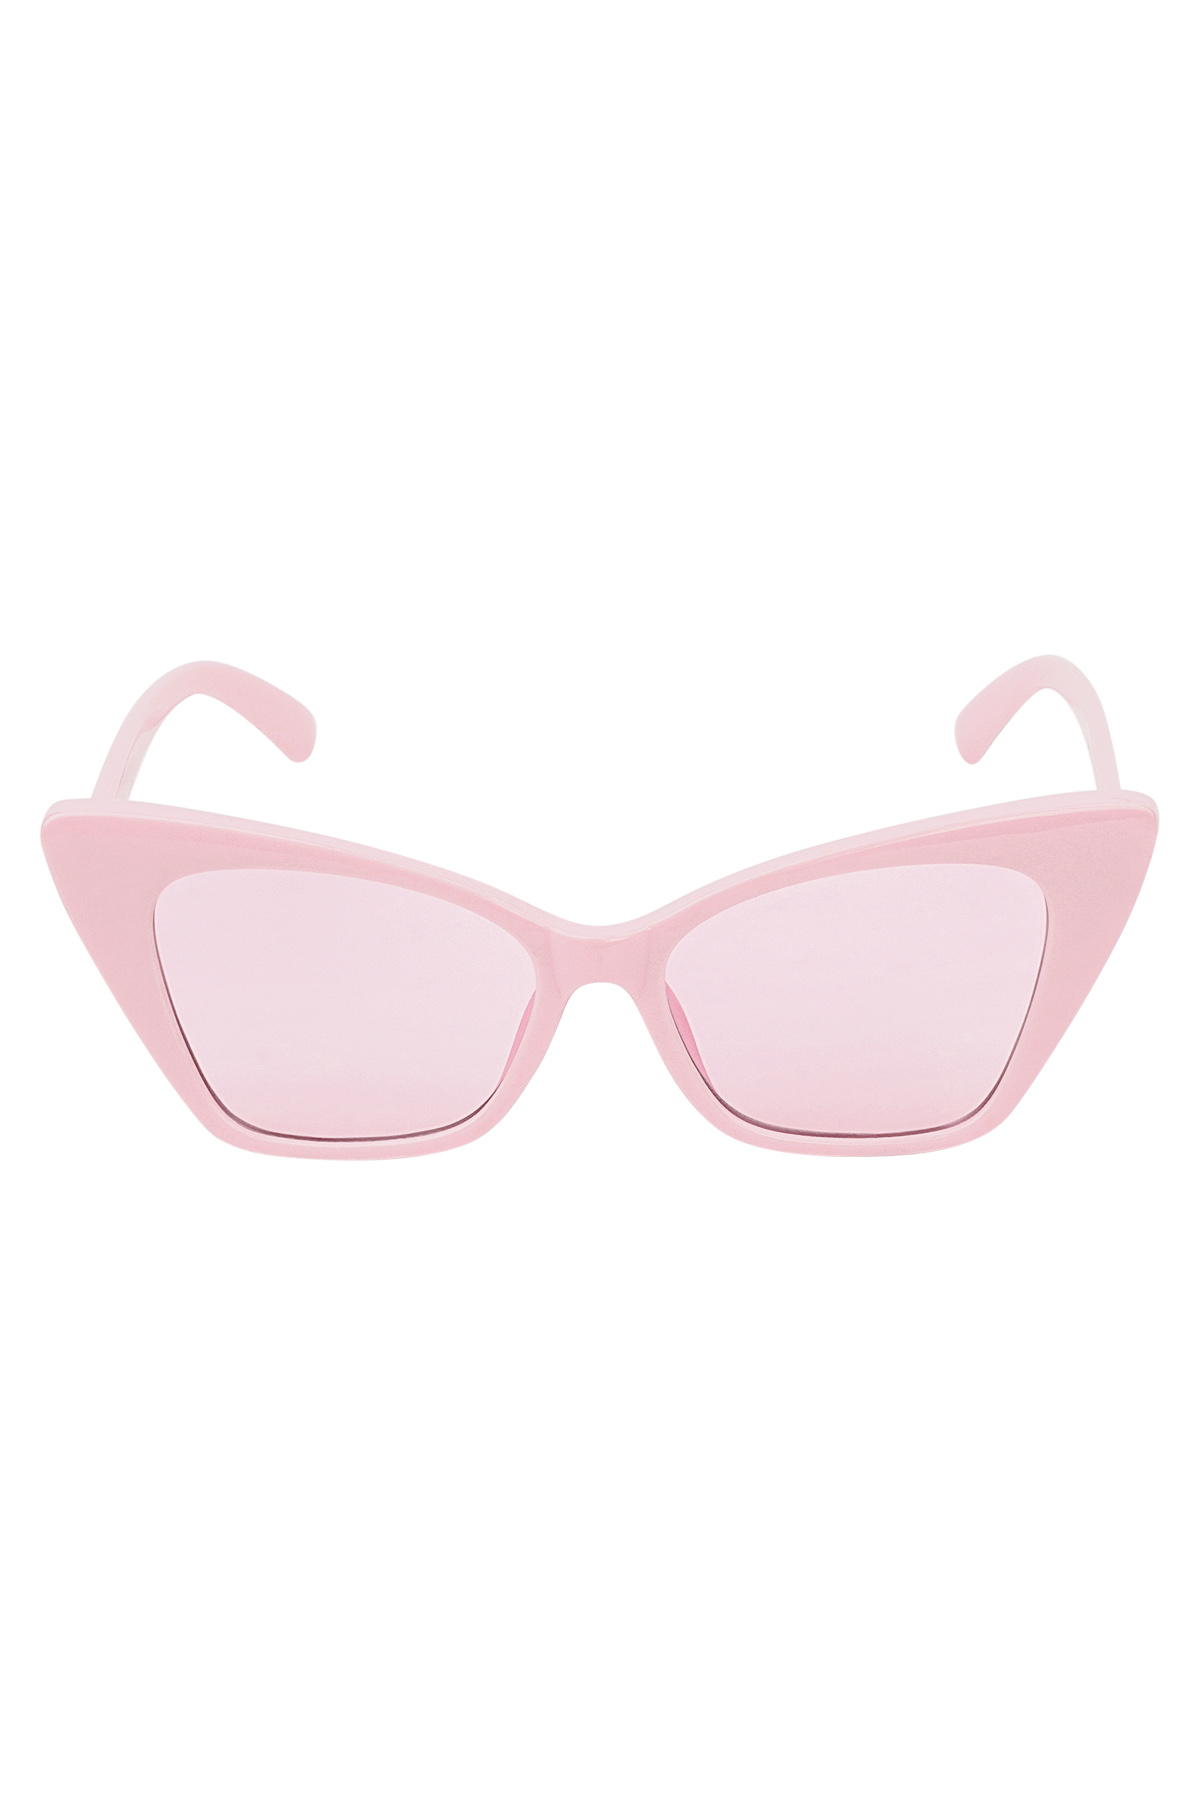 Sunglasses monochrome frame - pink h5 Picture7